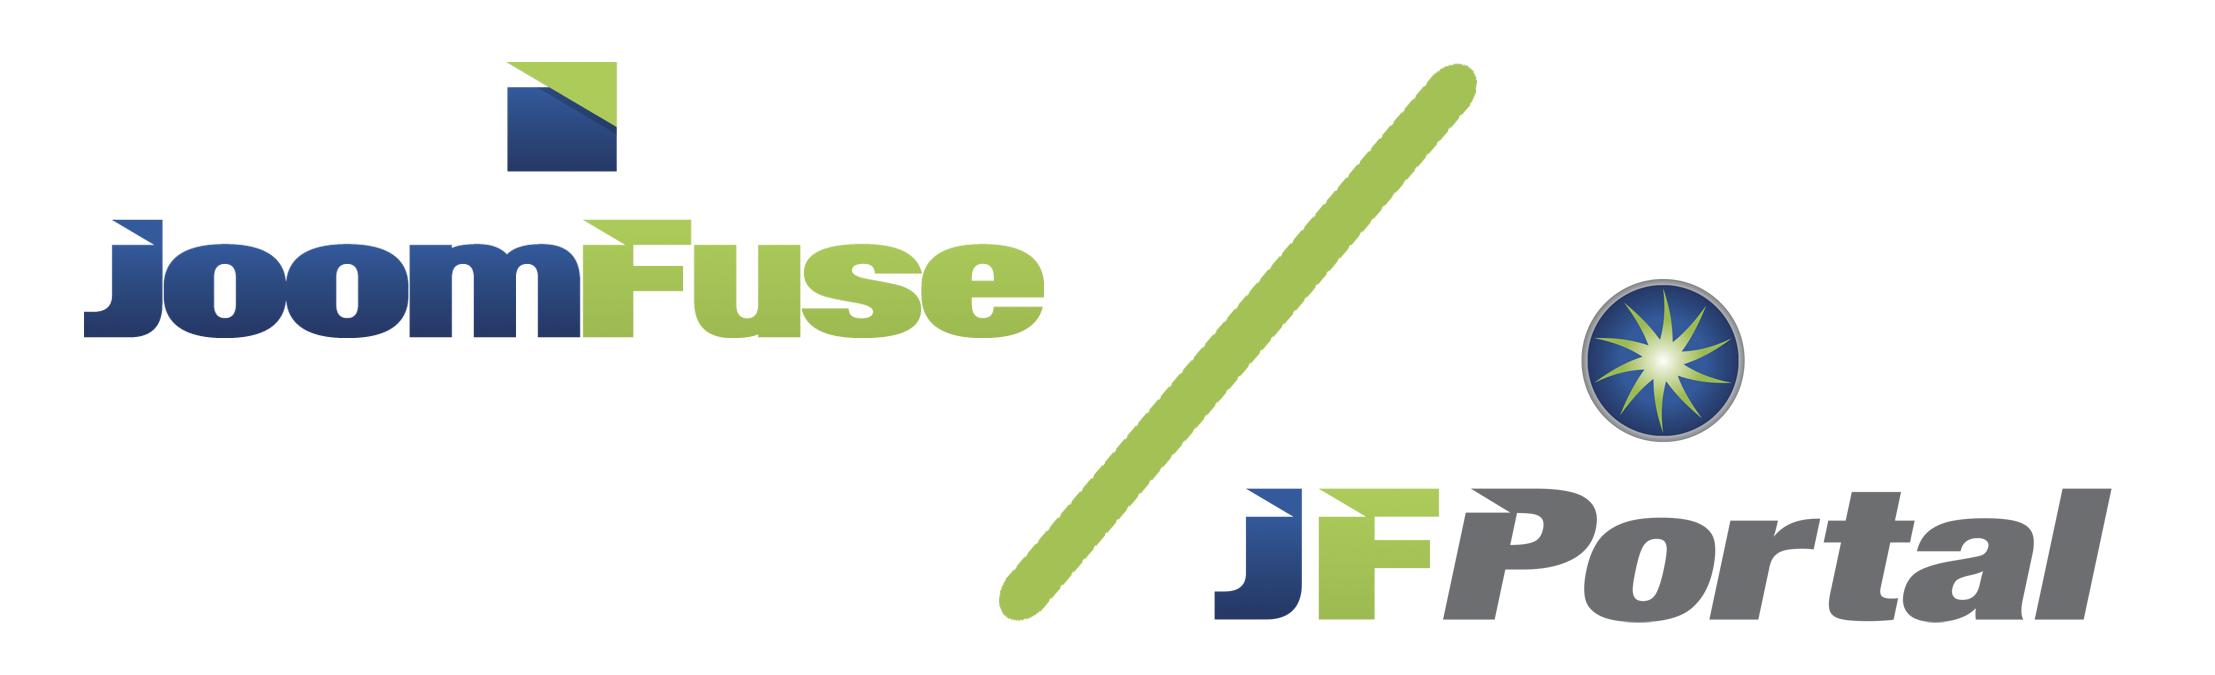 JoomFuse JFPortal logo